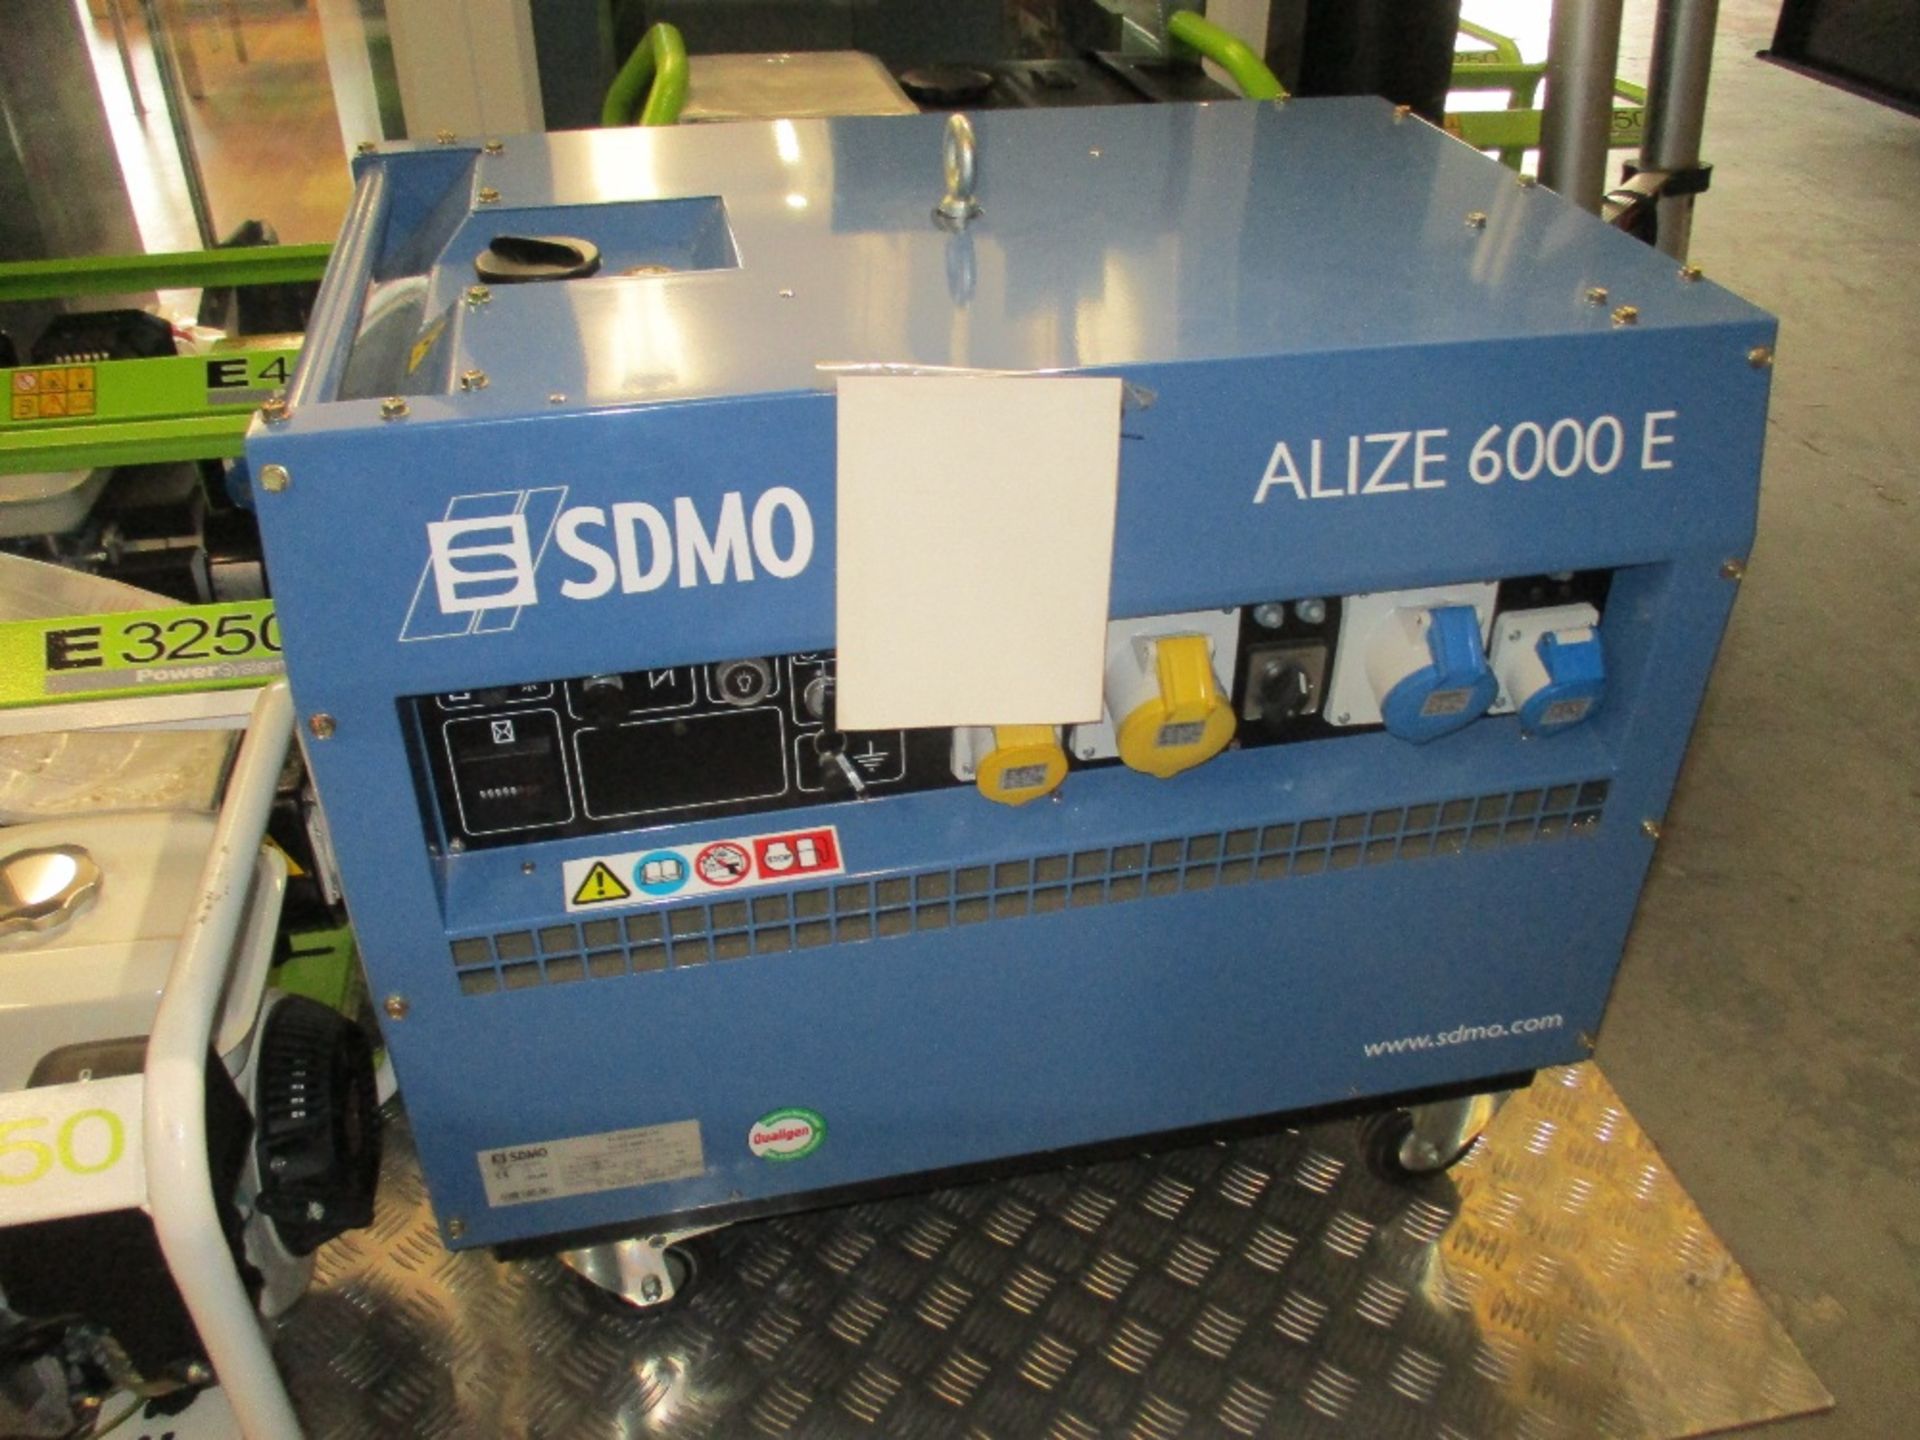 SDMO Alize 6000 silenced generator